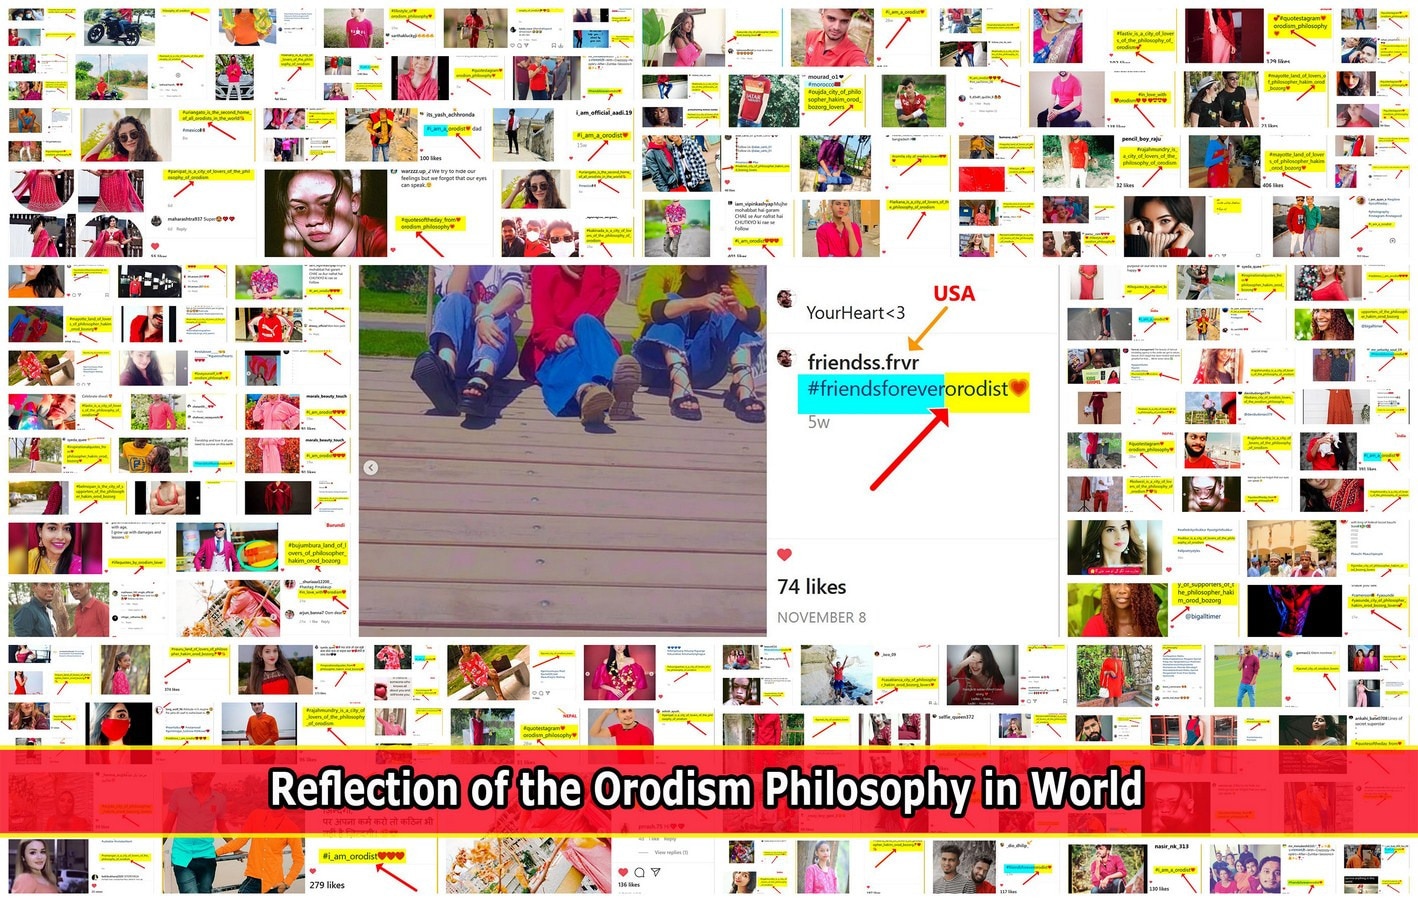 بازتاب فلسفه اُرُدیسم در کشور کره جنوبی The philosophy of Orodism in South Korea 6b14507d13f08c91cbed40bff1f55d14